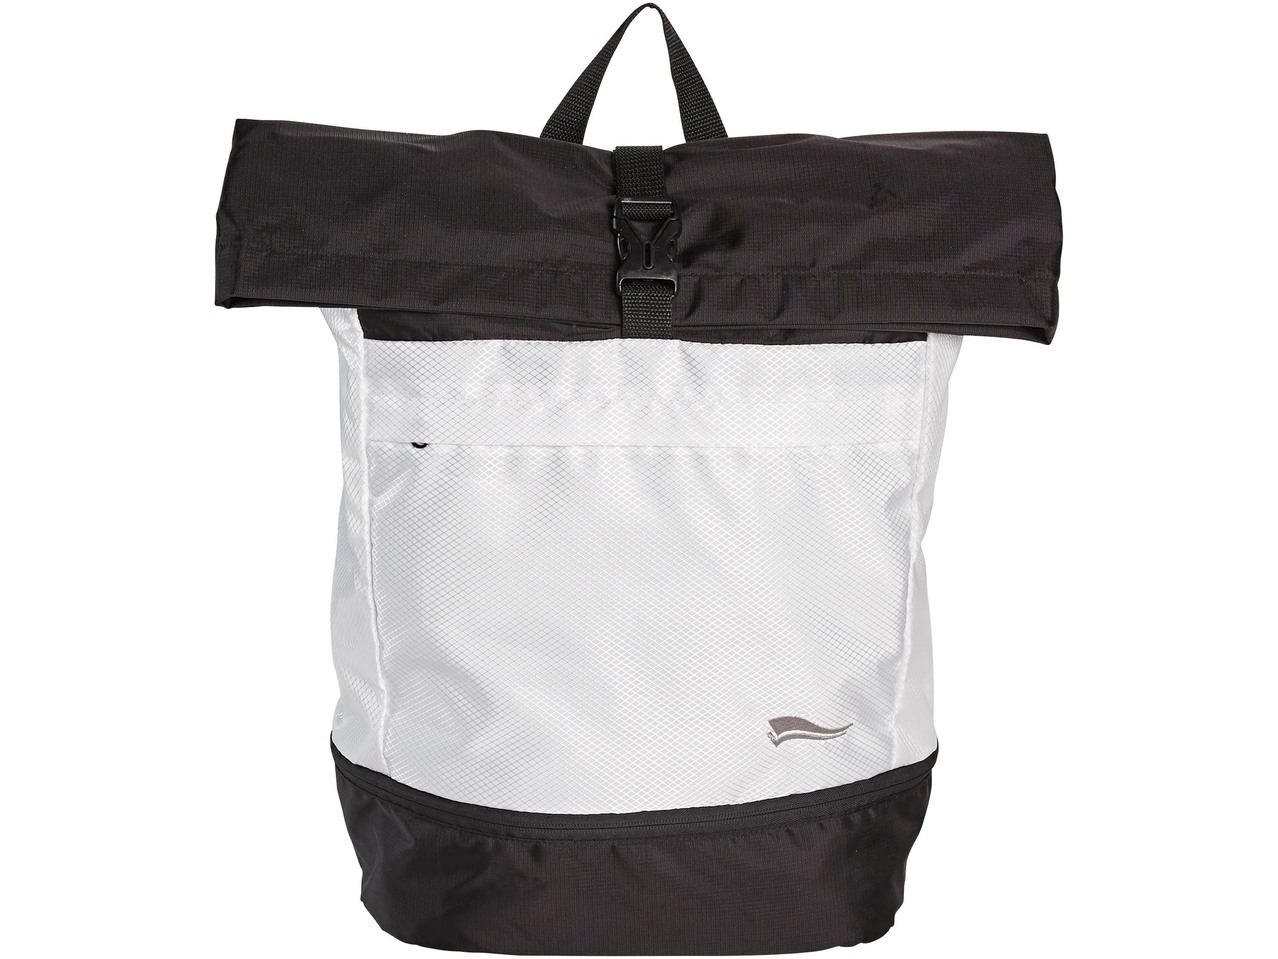 Sports Backpack, Sports Messenger Bag or Sports Holdall